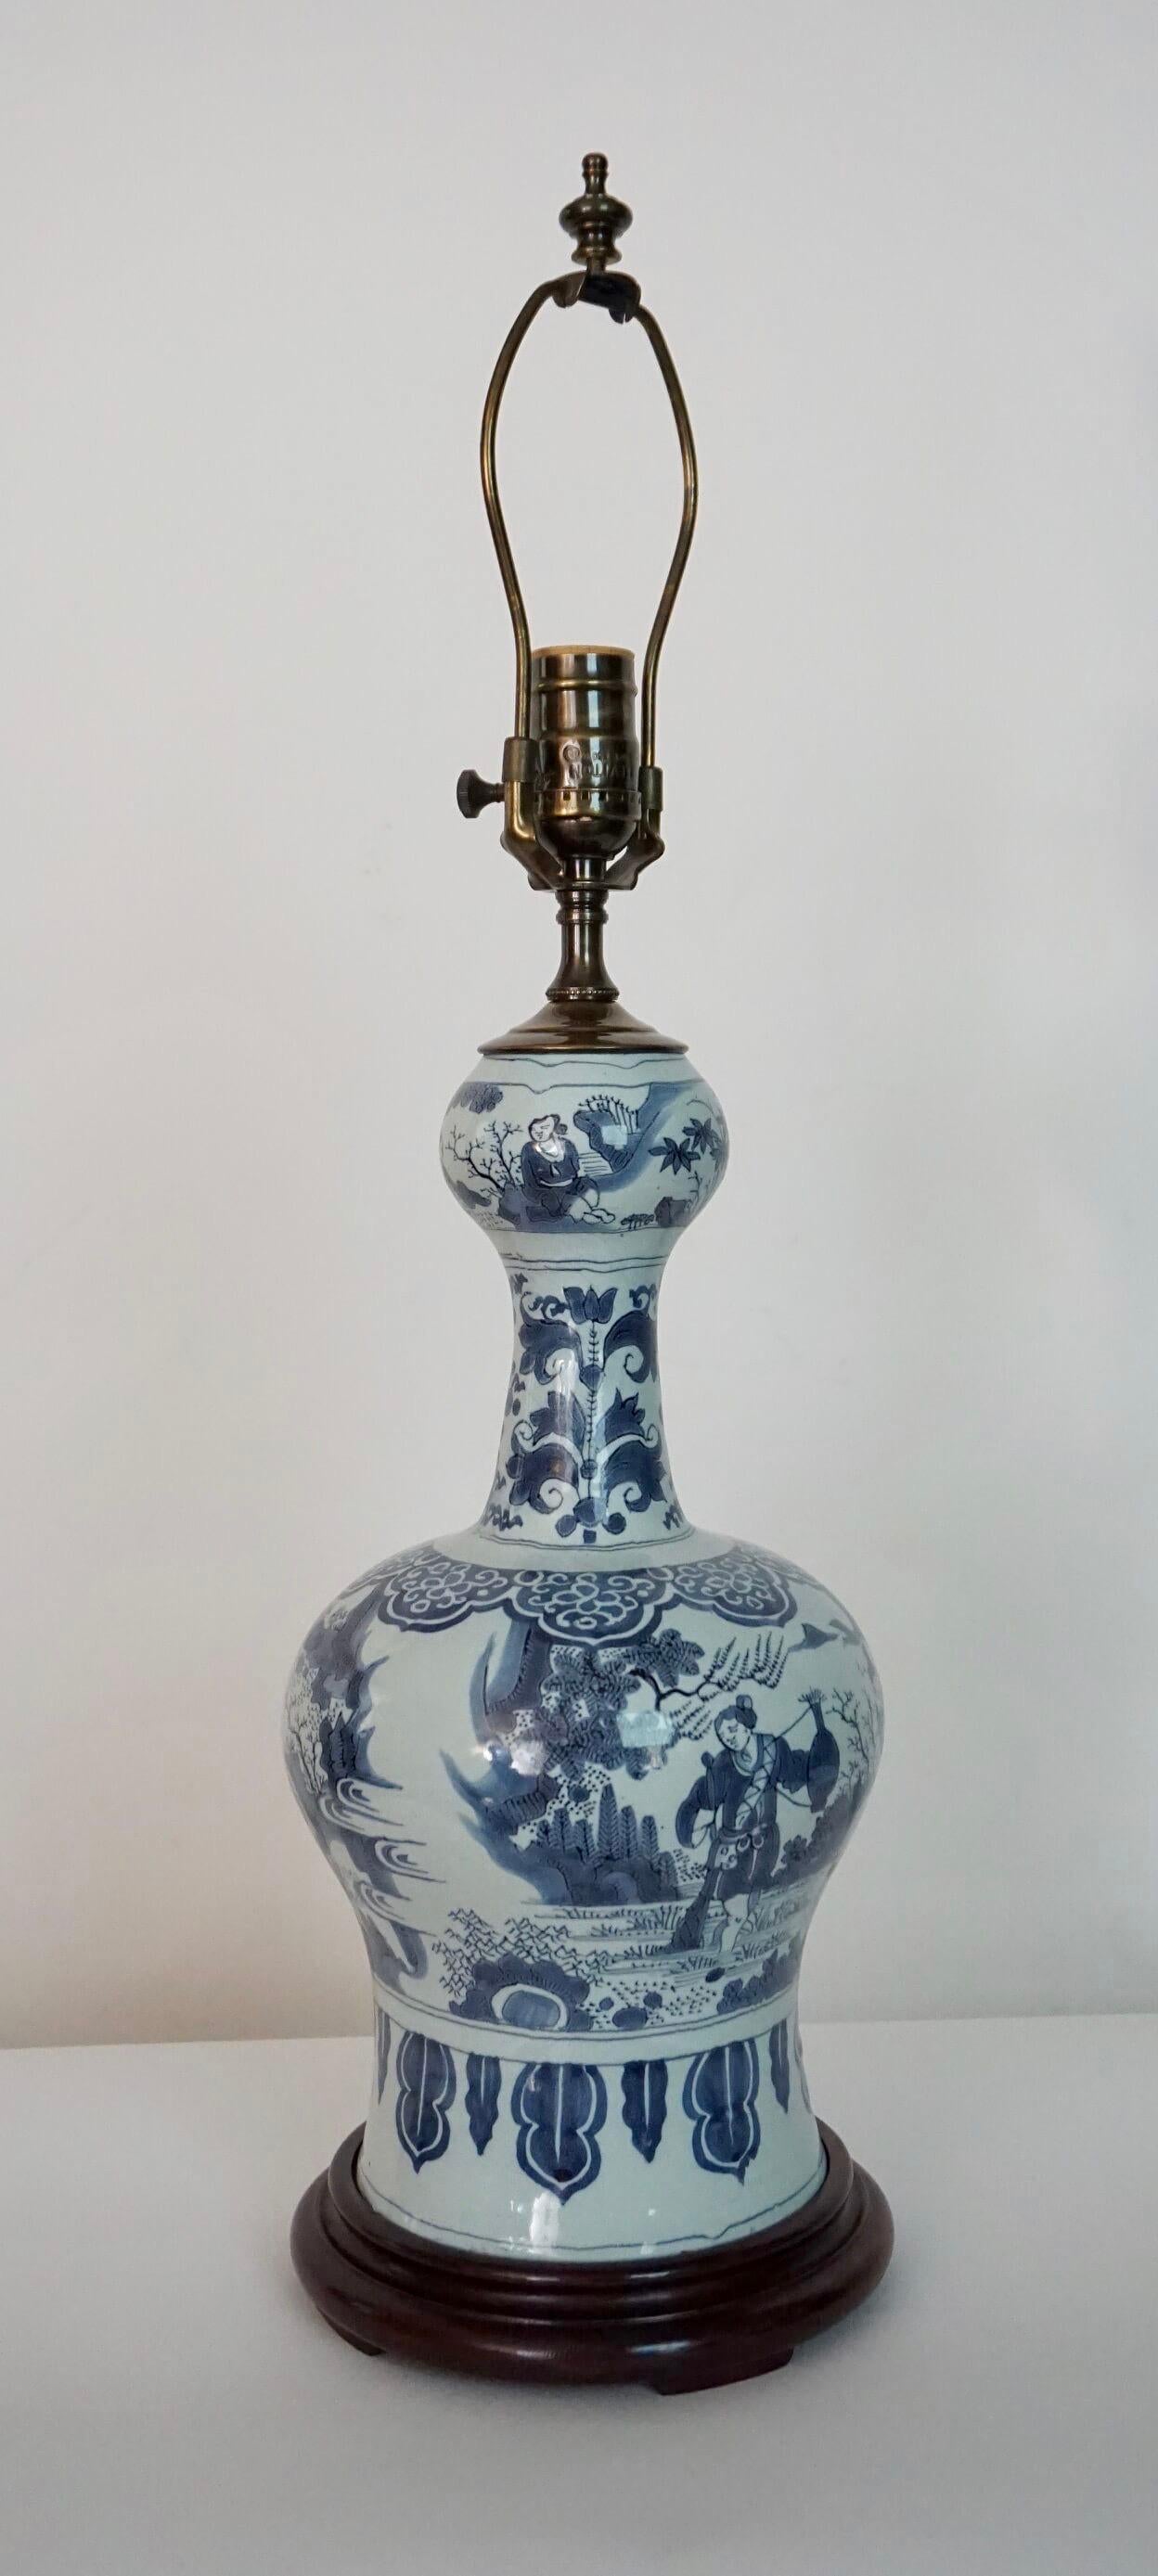 Brass Blue and White Dutch Delft Garlic Neck Vase now Table Lamp, circa 1700